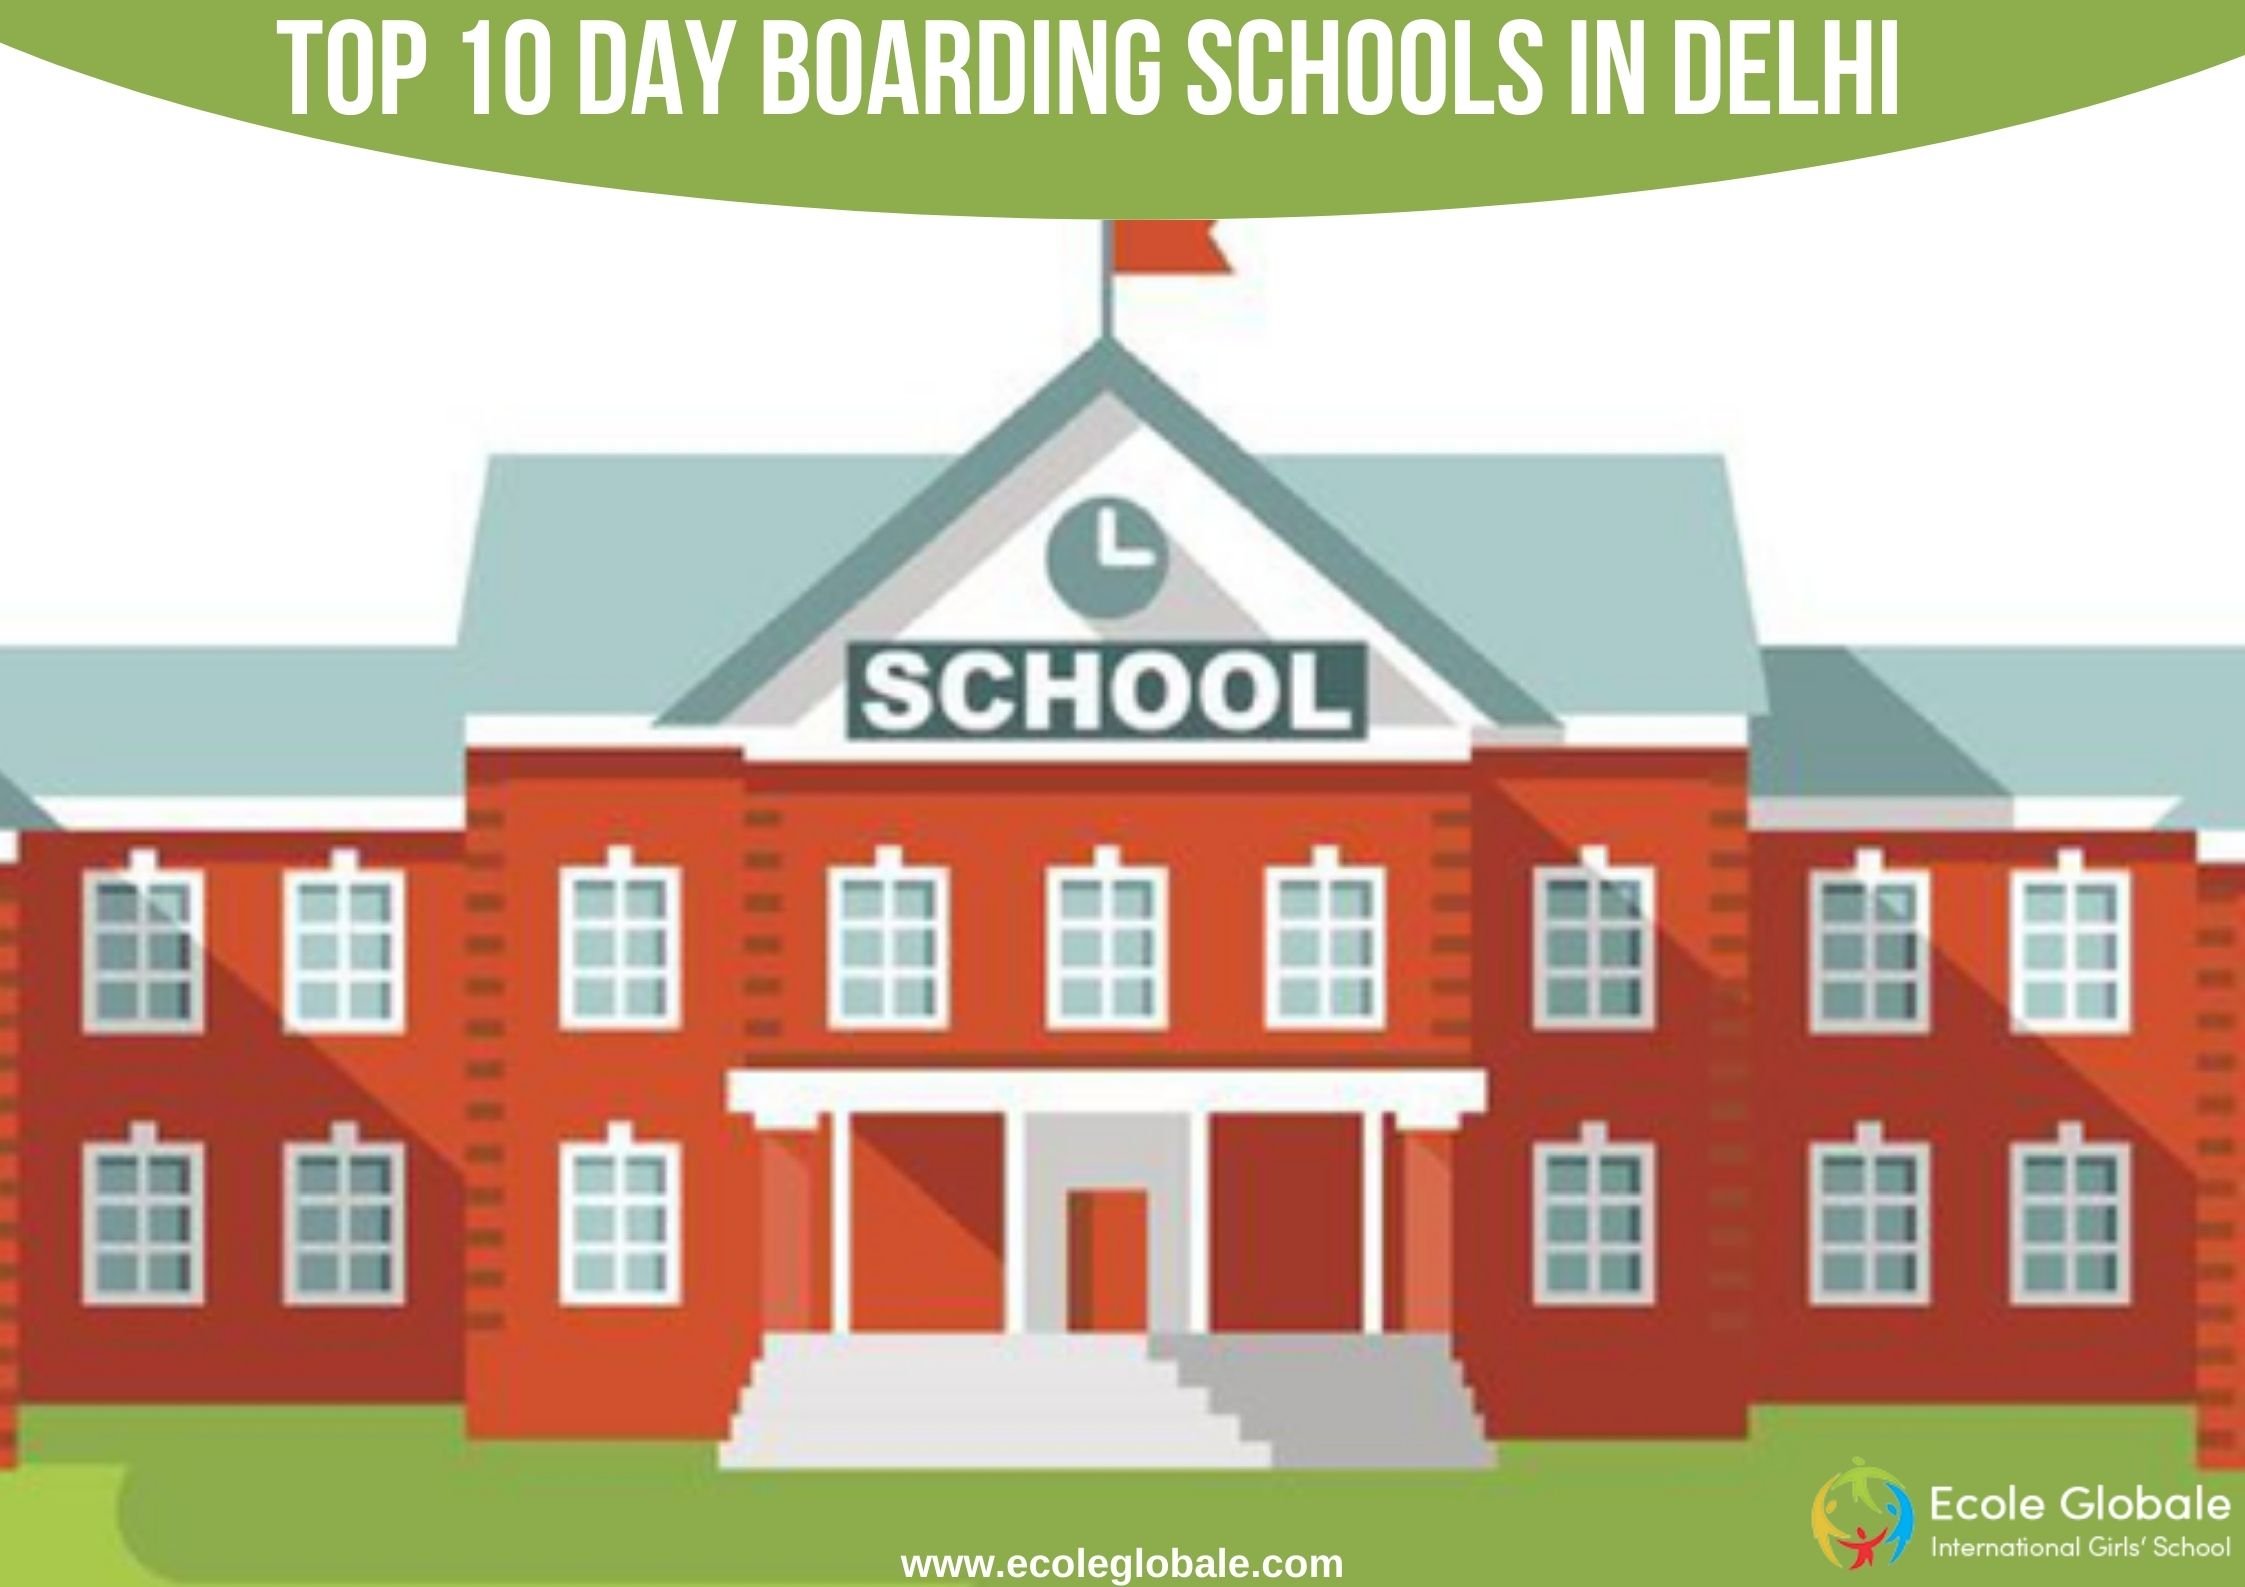 Which are the Top 10 Day Boarding Schools in Delhi?